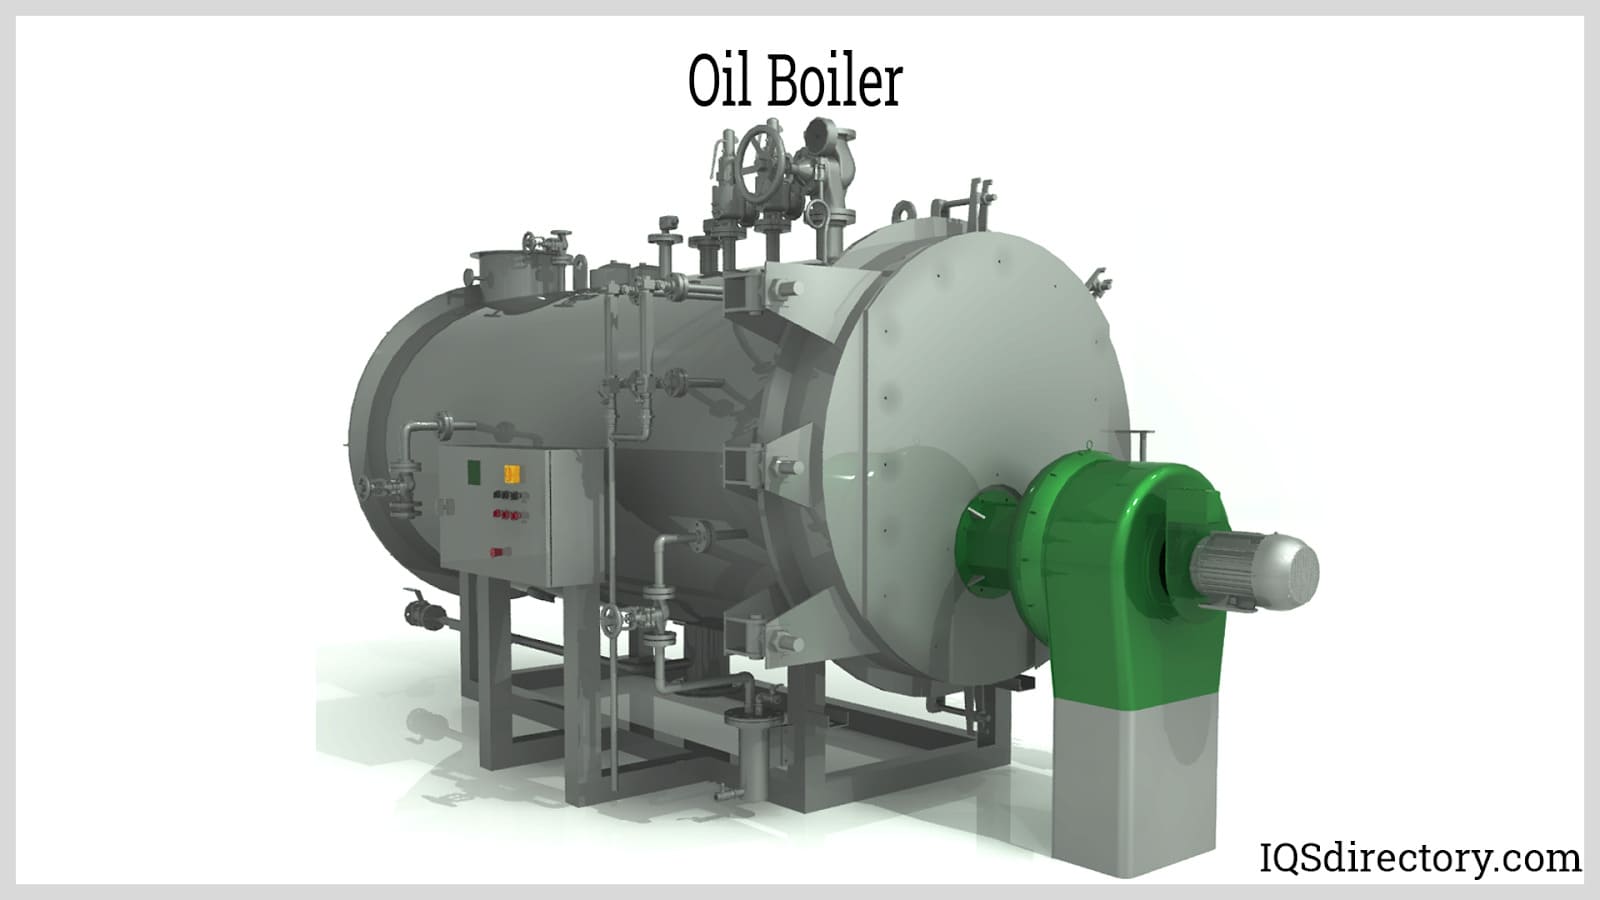 Oil Boilers